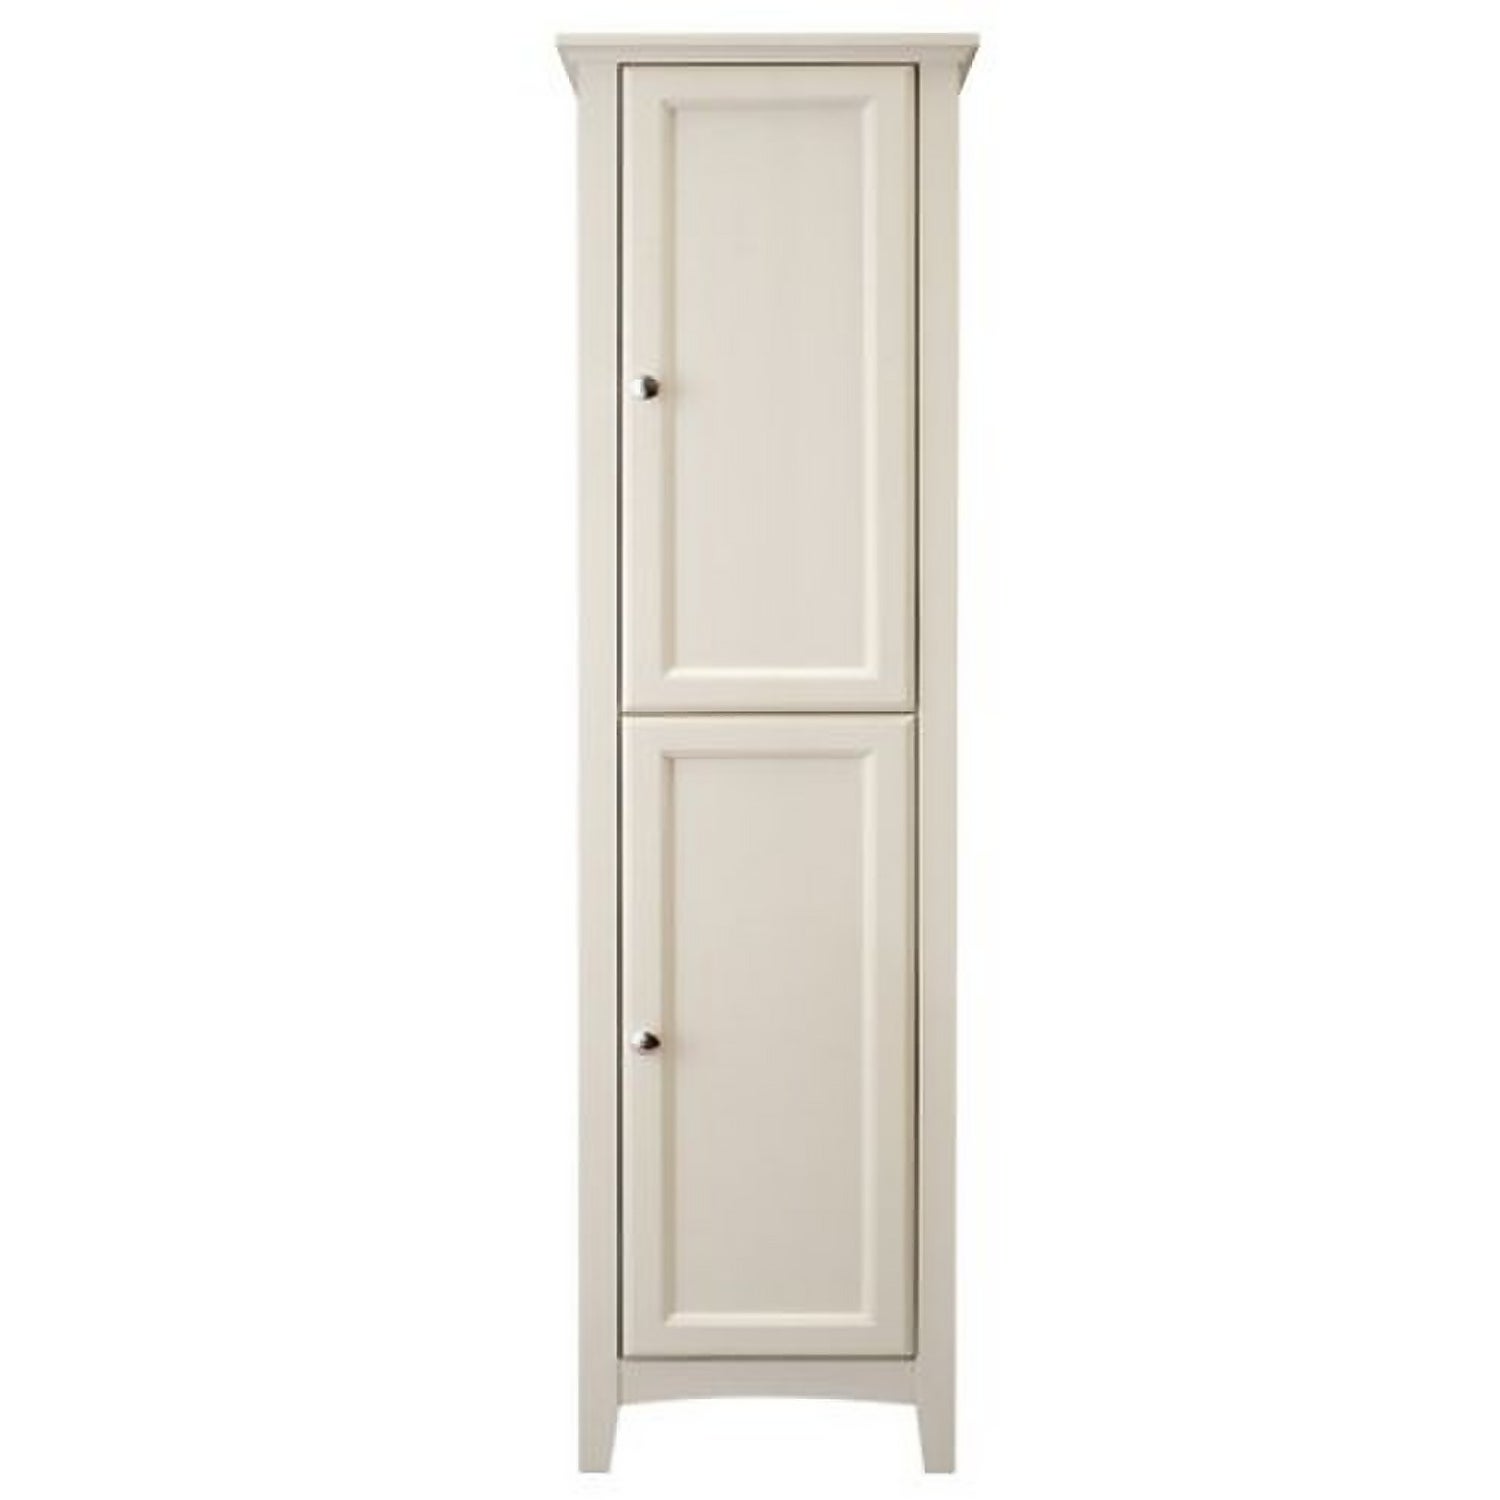 Savoy 400mm Tall Floorstanding Storage Cabinet - Old English White